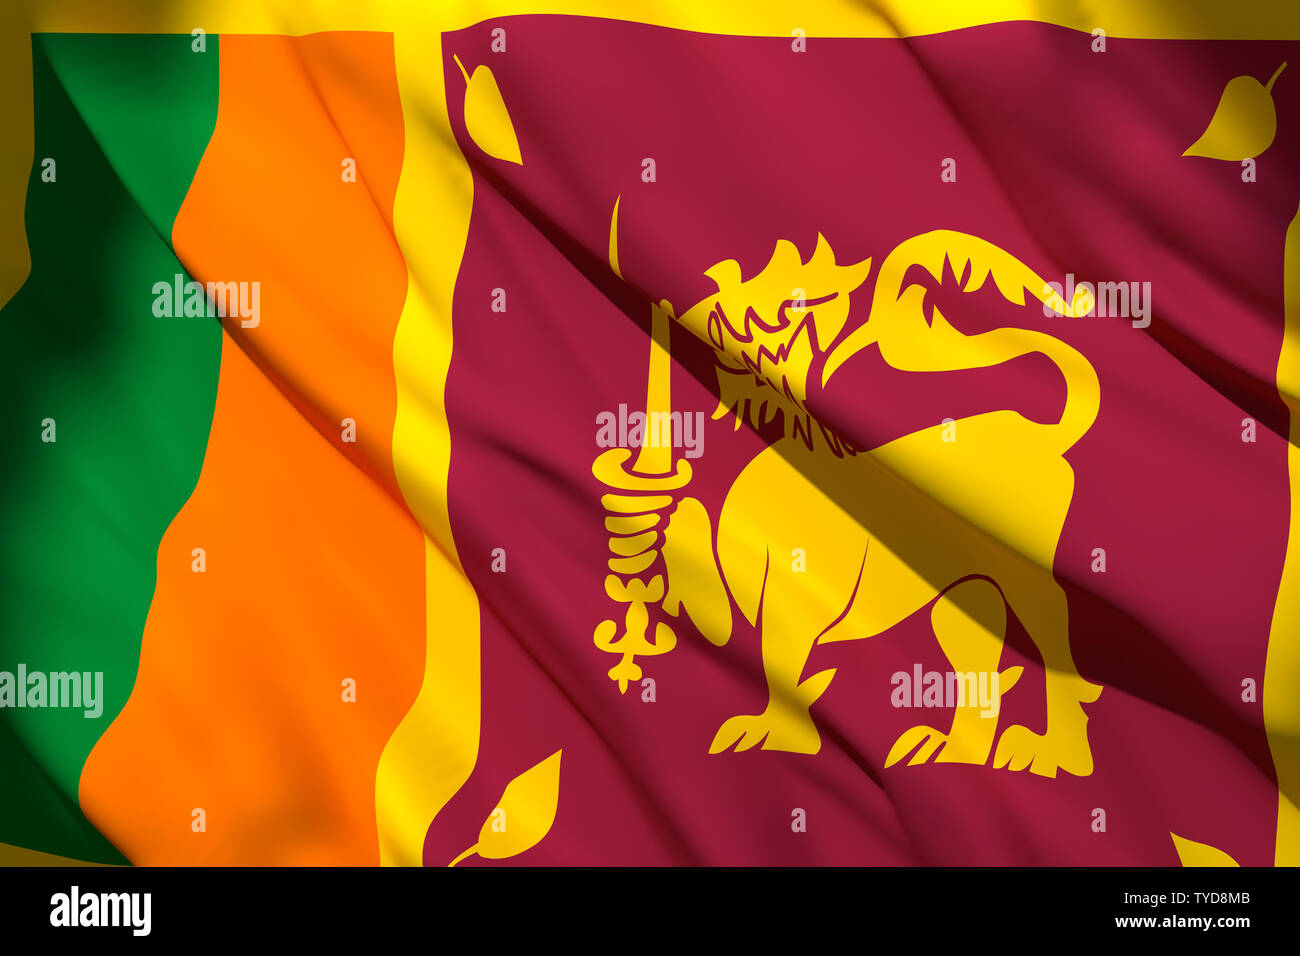 3d rendering of a Sri Lanka national flag waving Stock Photo